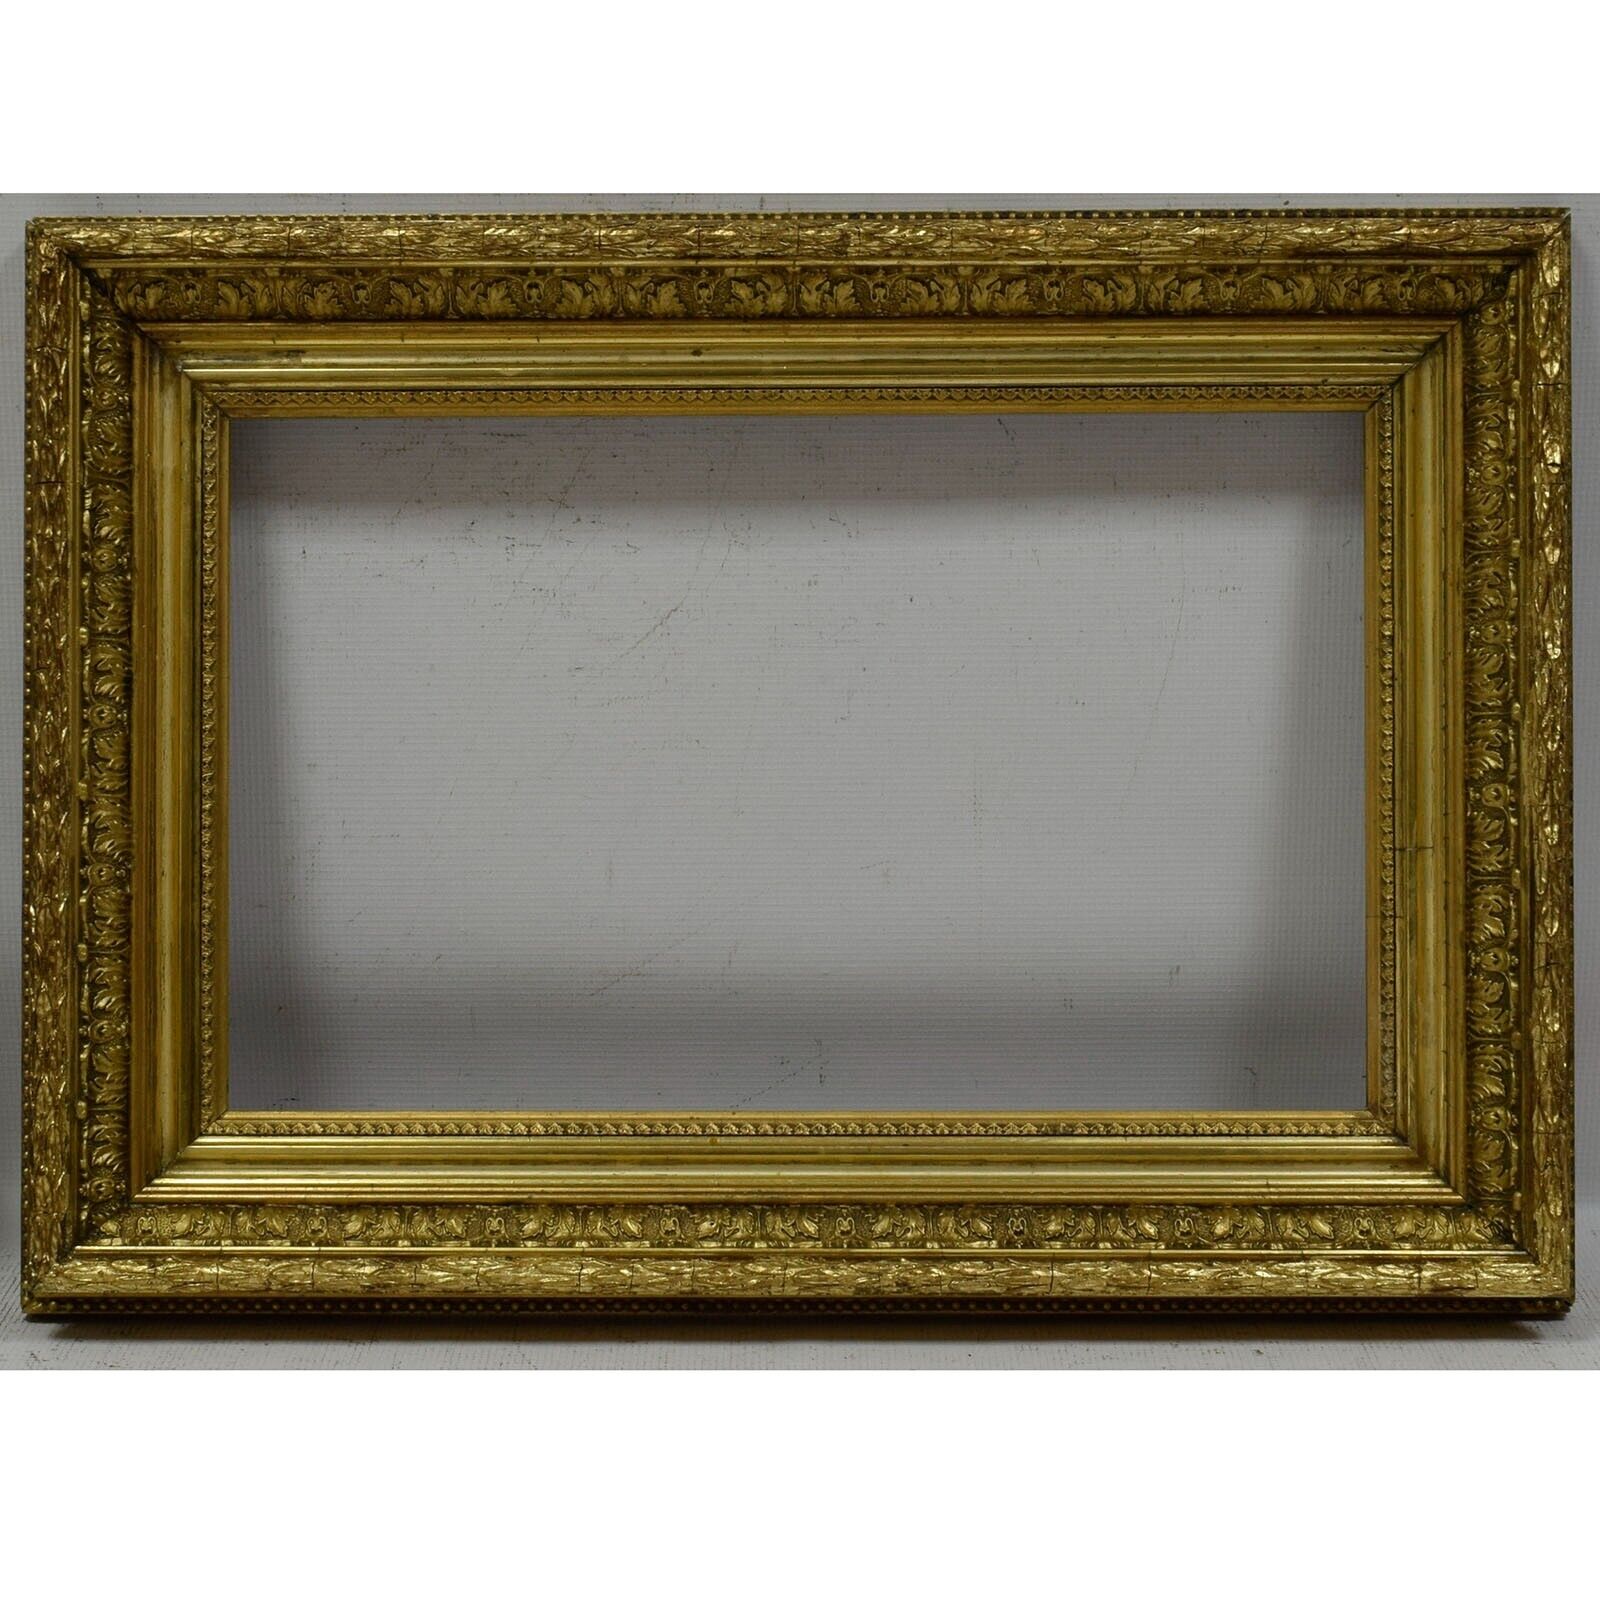 Ca. 1880-1900 old wooden devorative painting frame 18.7 x 12 in inside